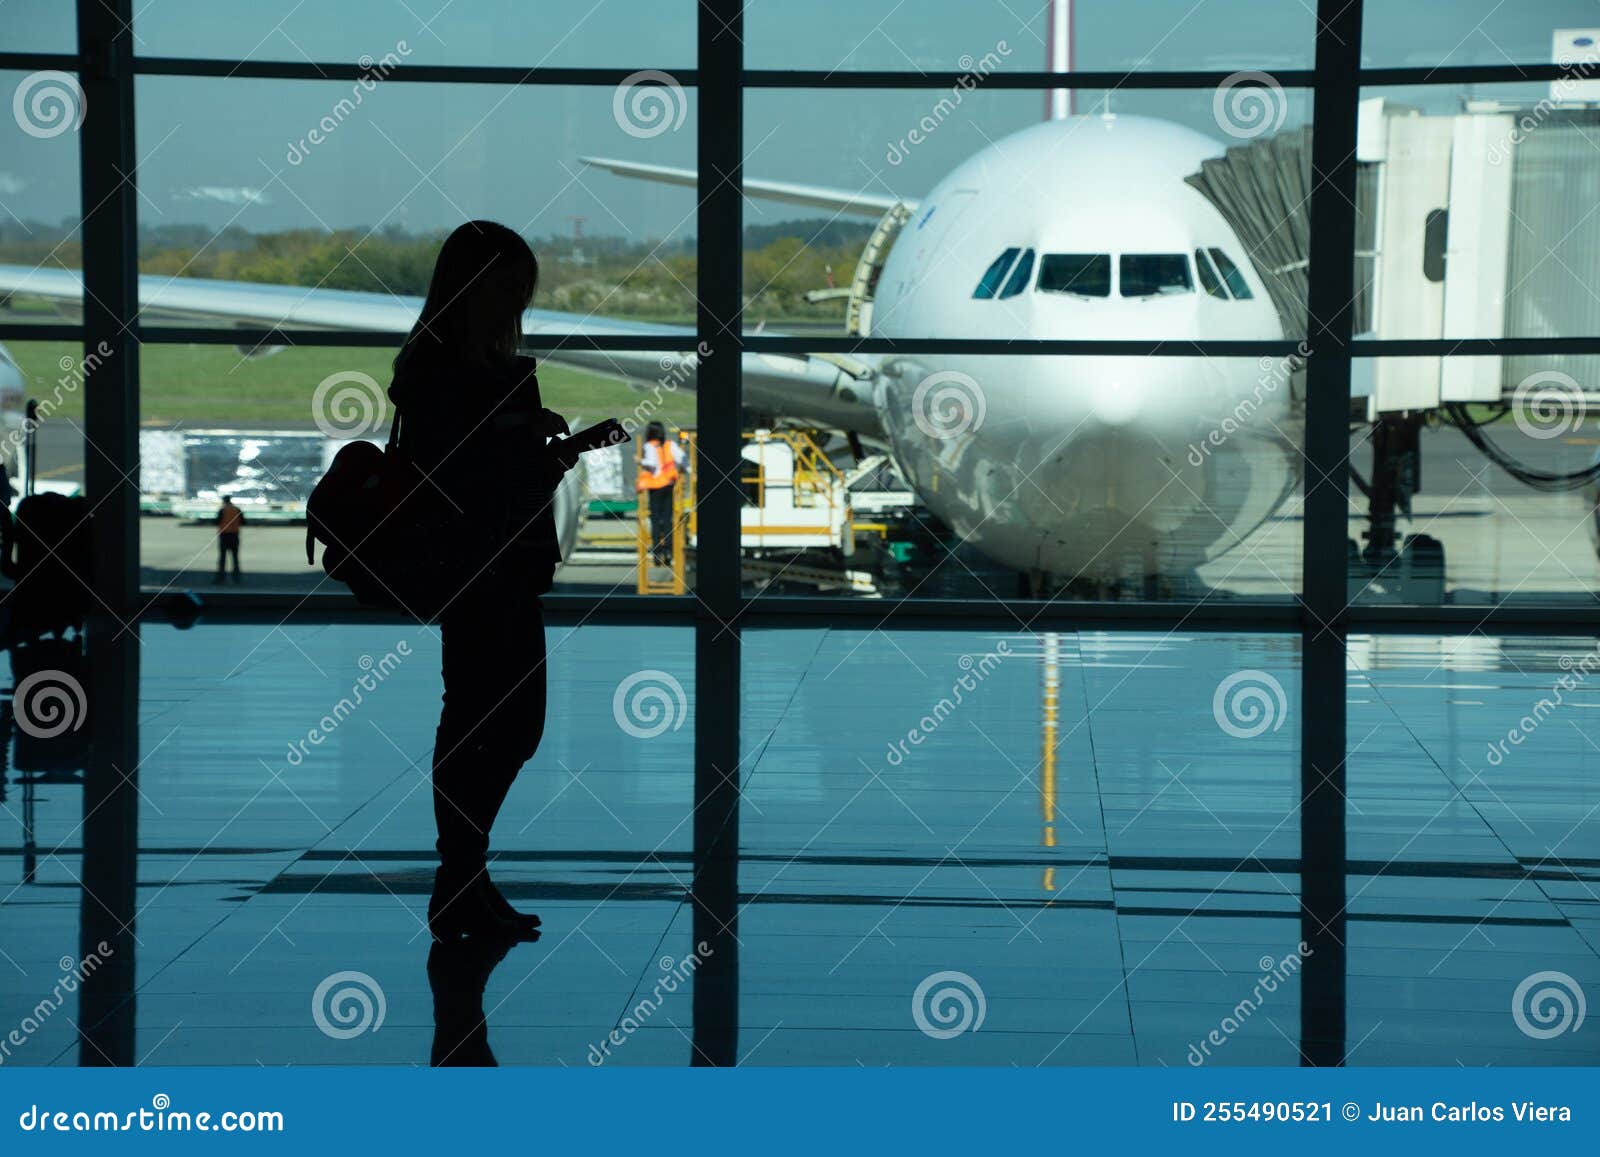 woman waiting plane